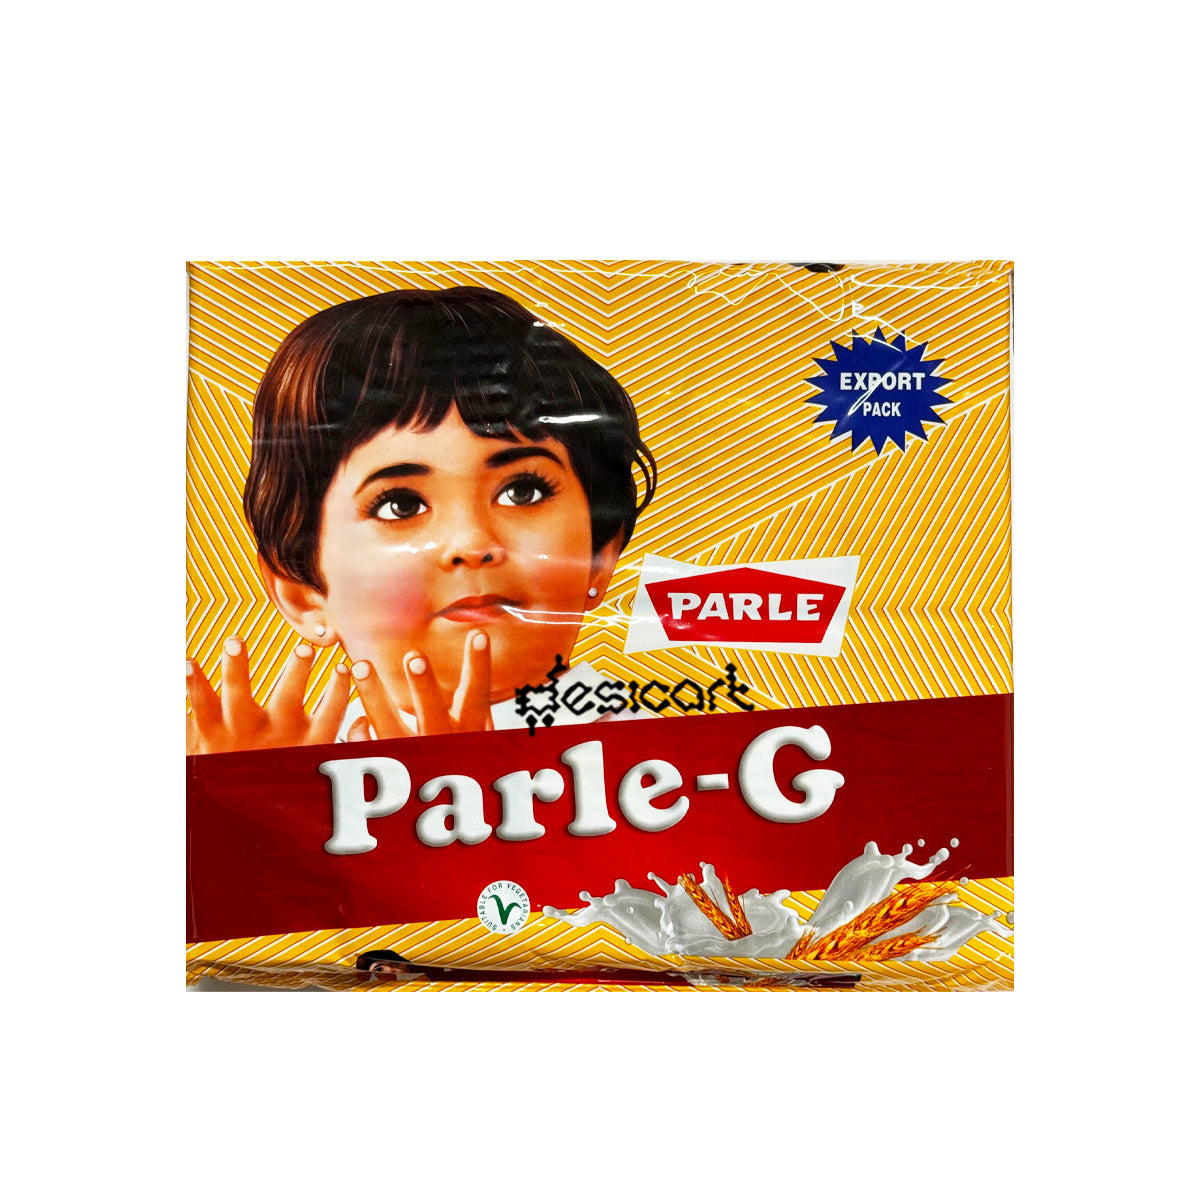 PARLE-G BISCUIT 799G